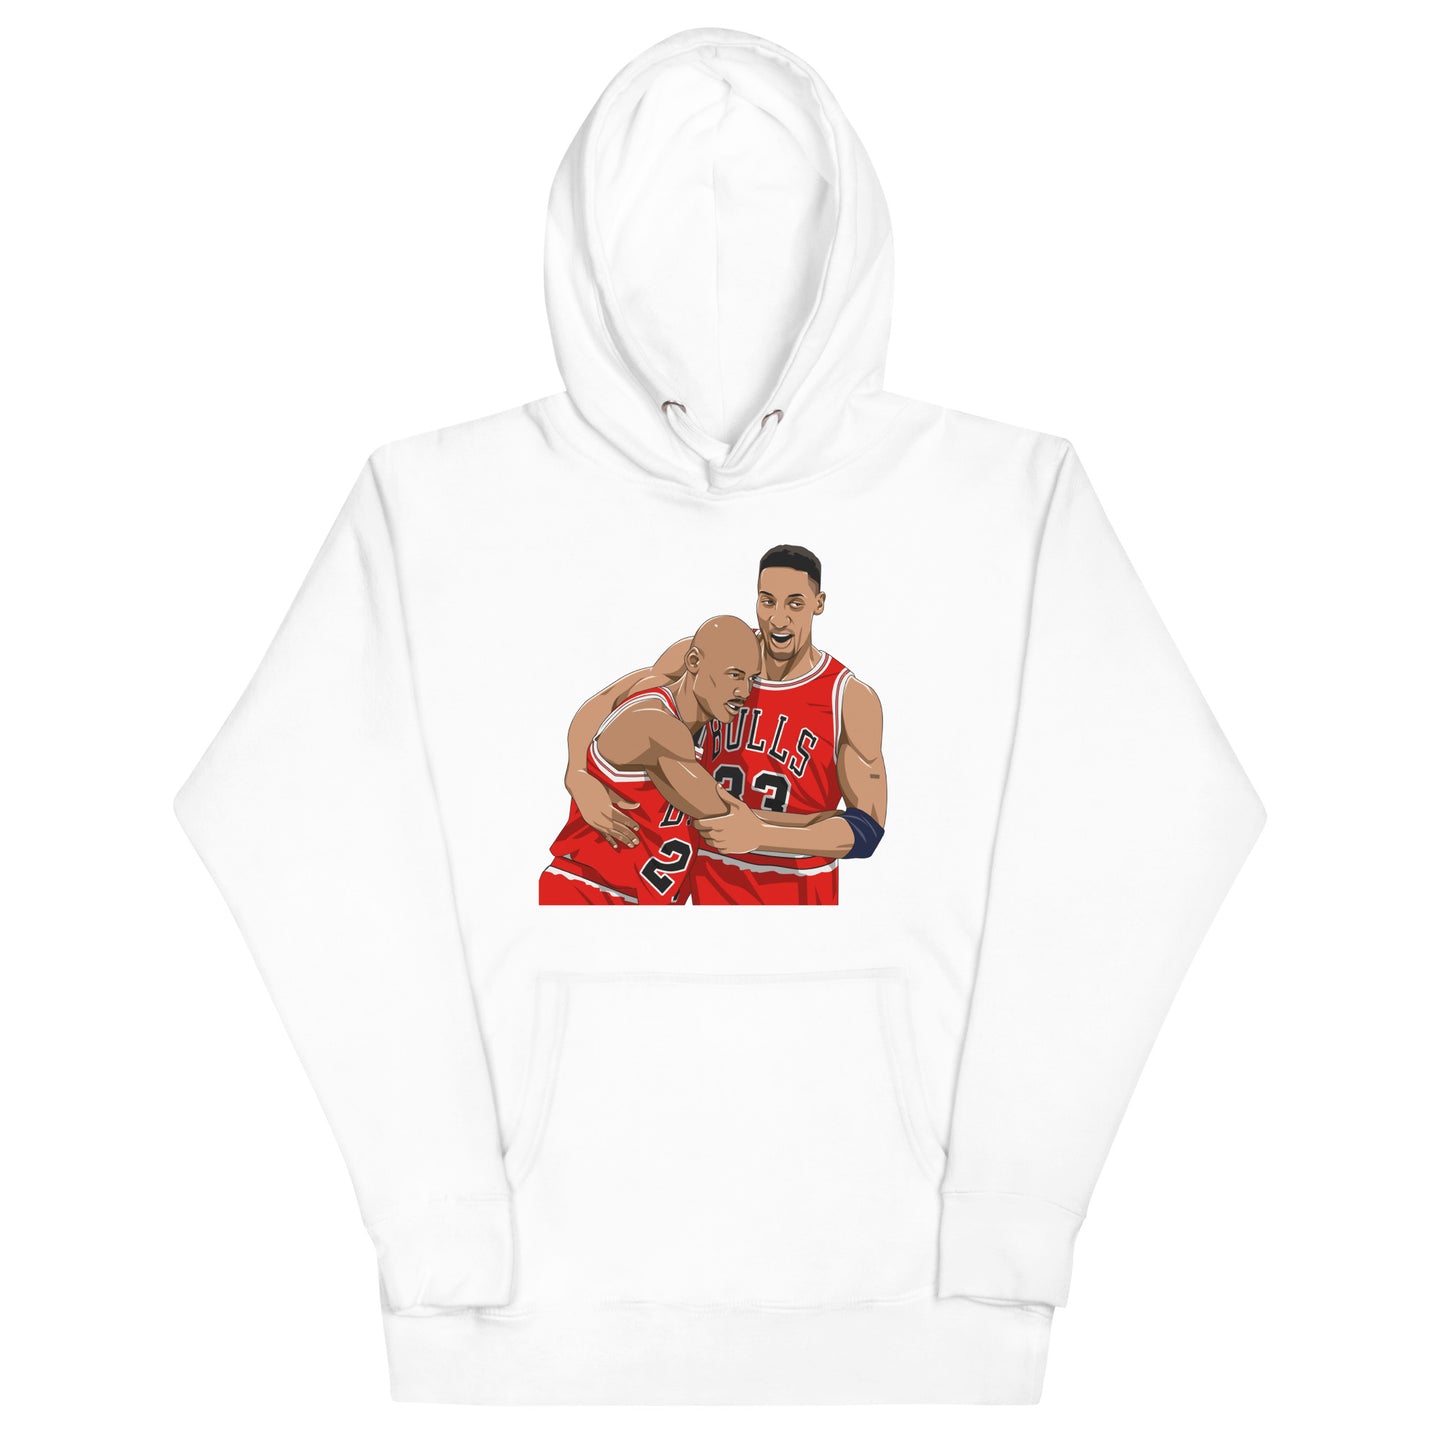 Michael Jordan and Scottie Pippen - "Flu Game" hoodie